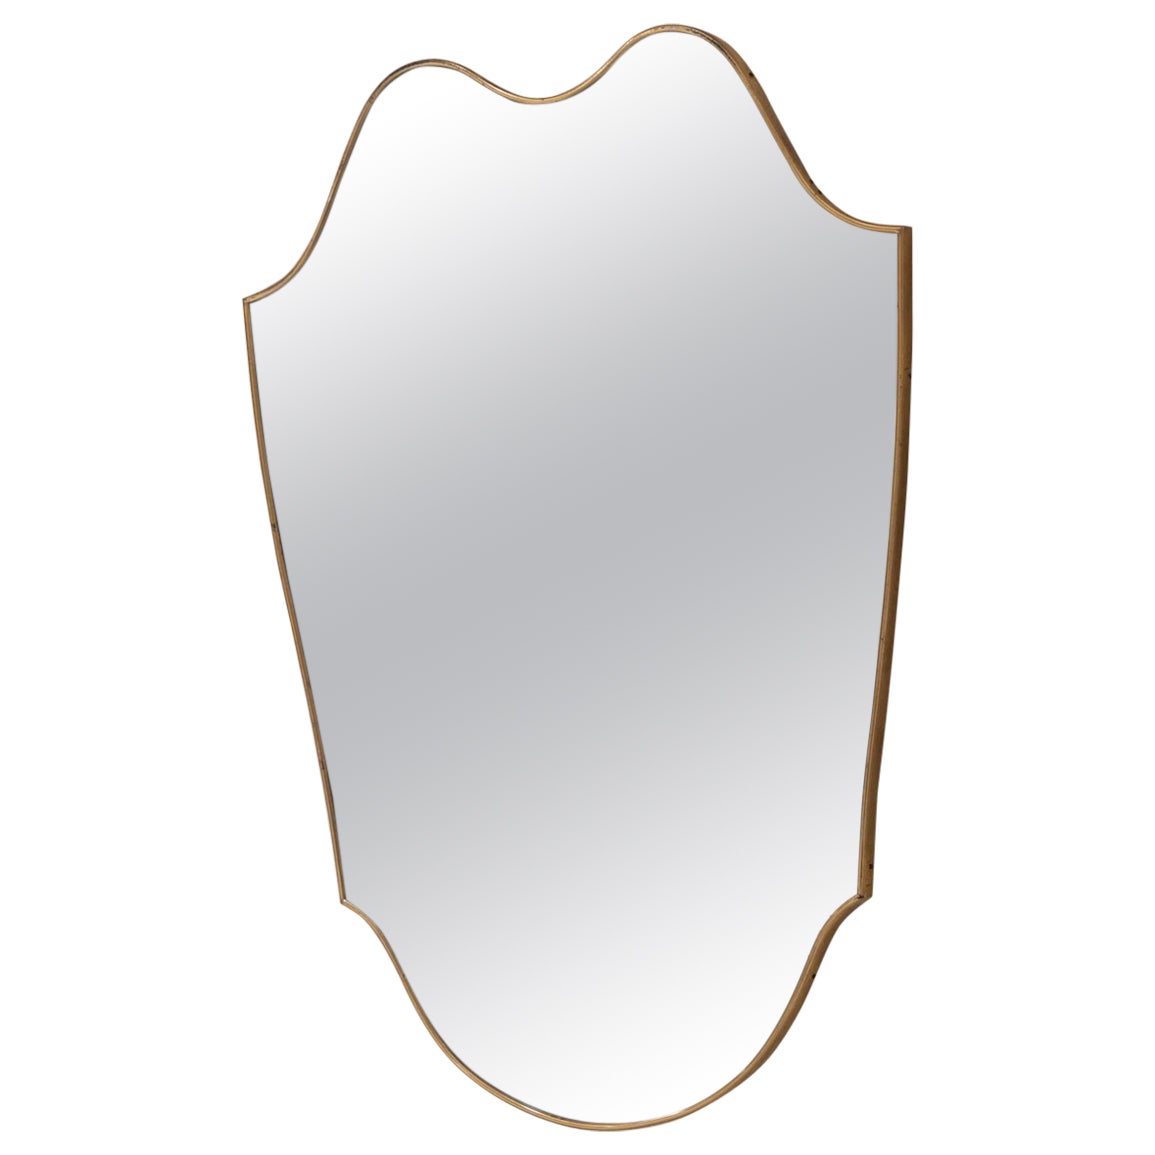 Midcentury italian wall mirror in the style of Gio Ponti